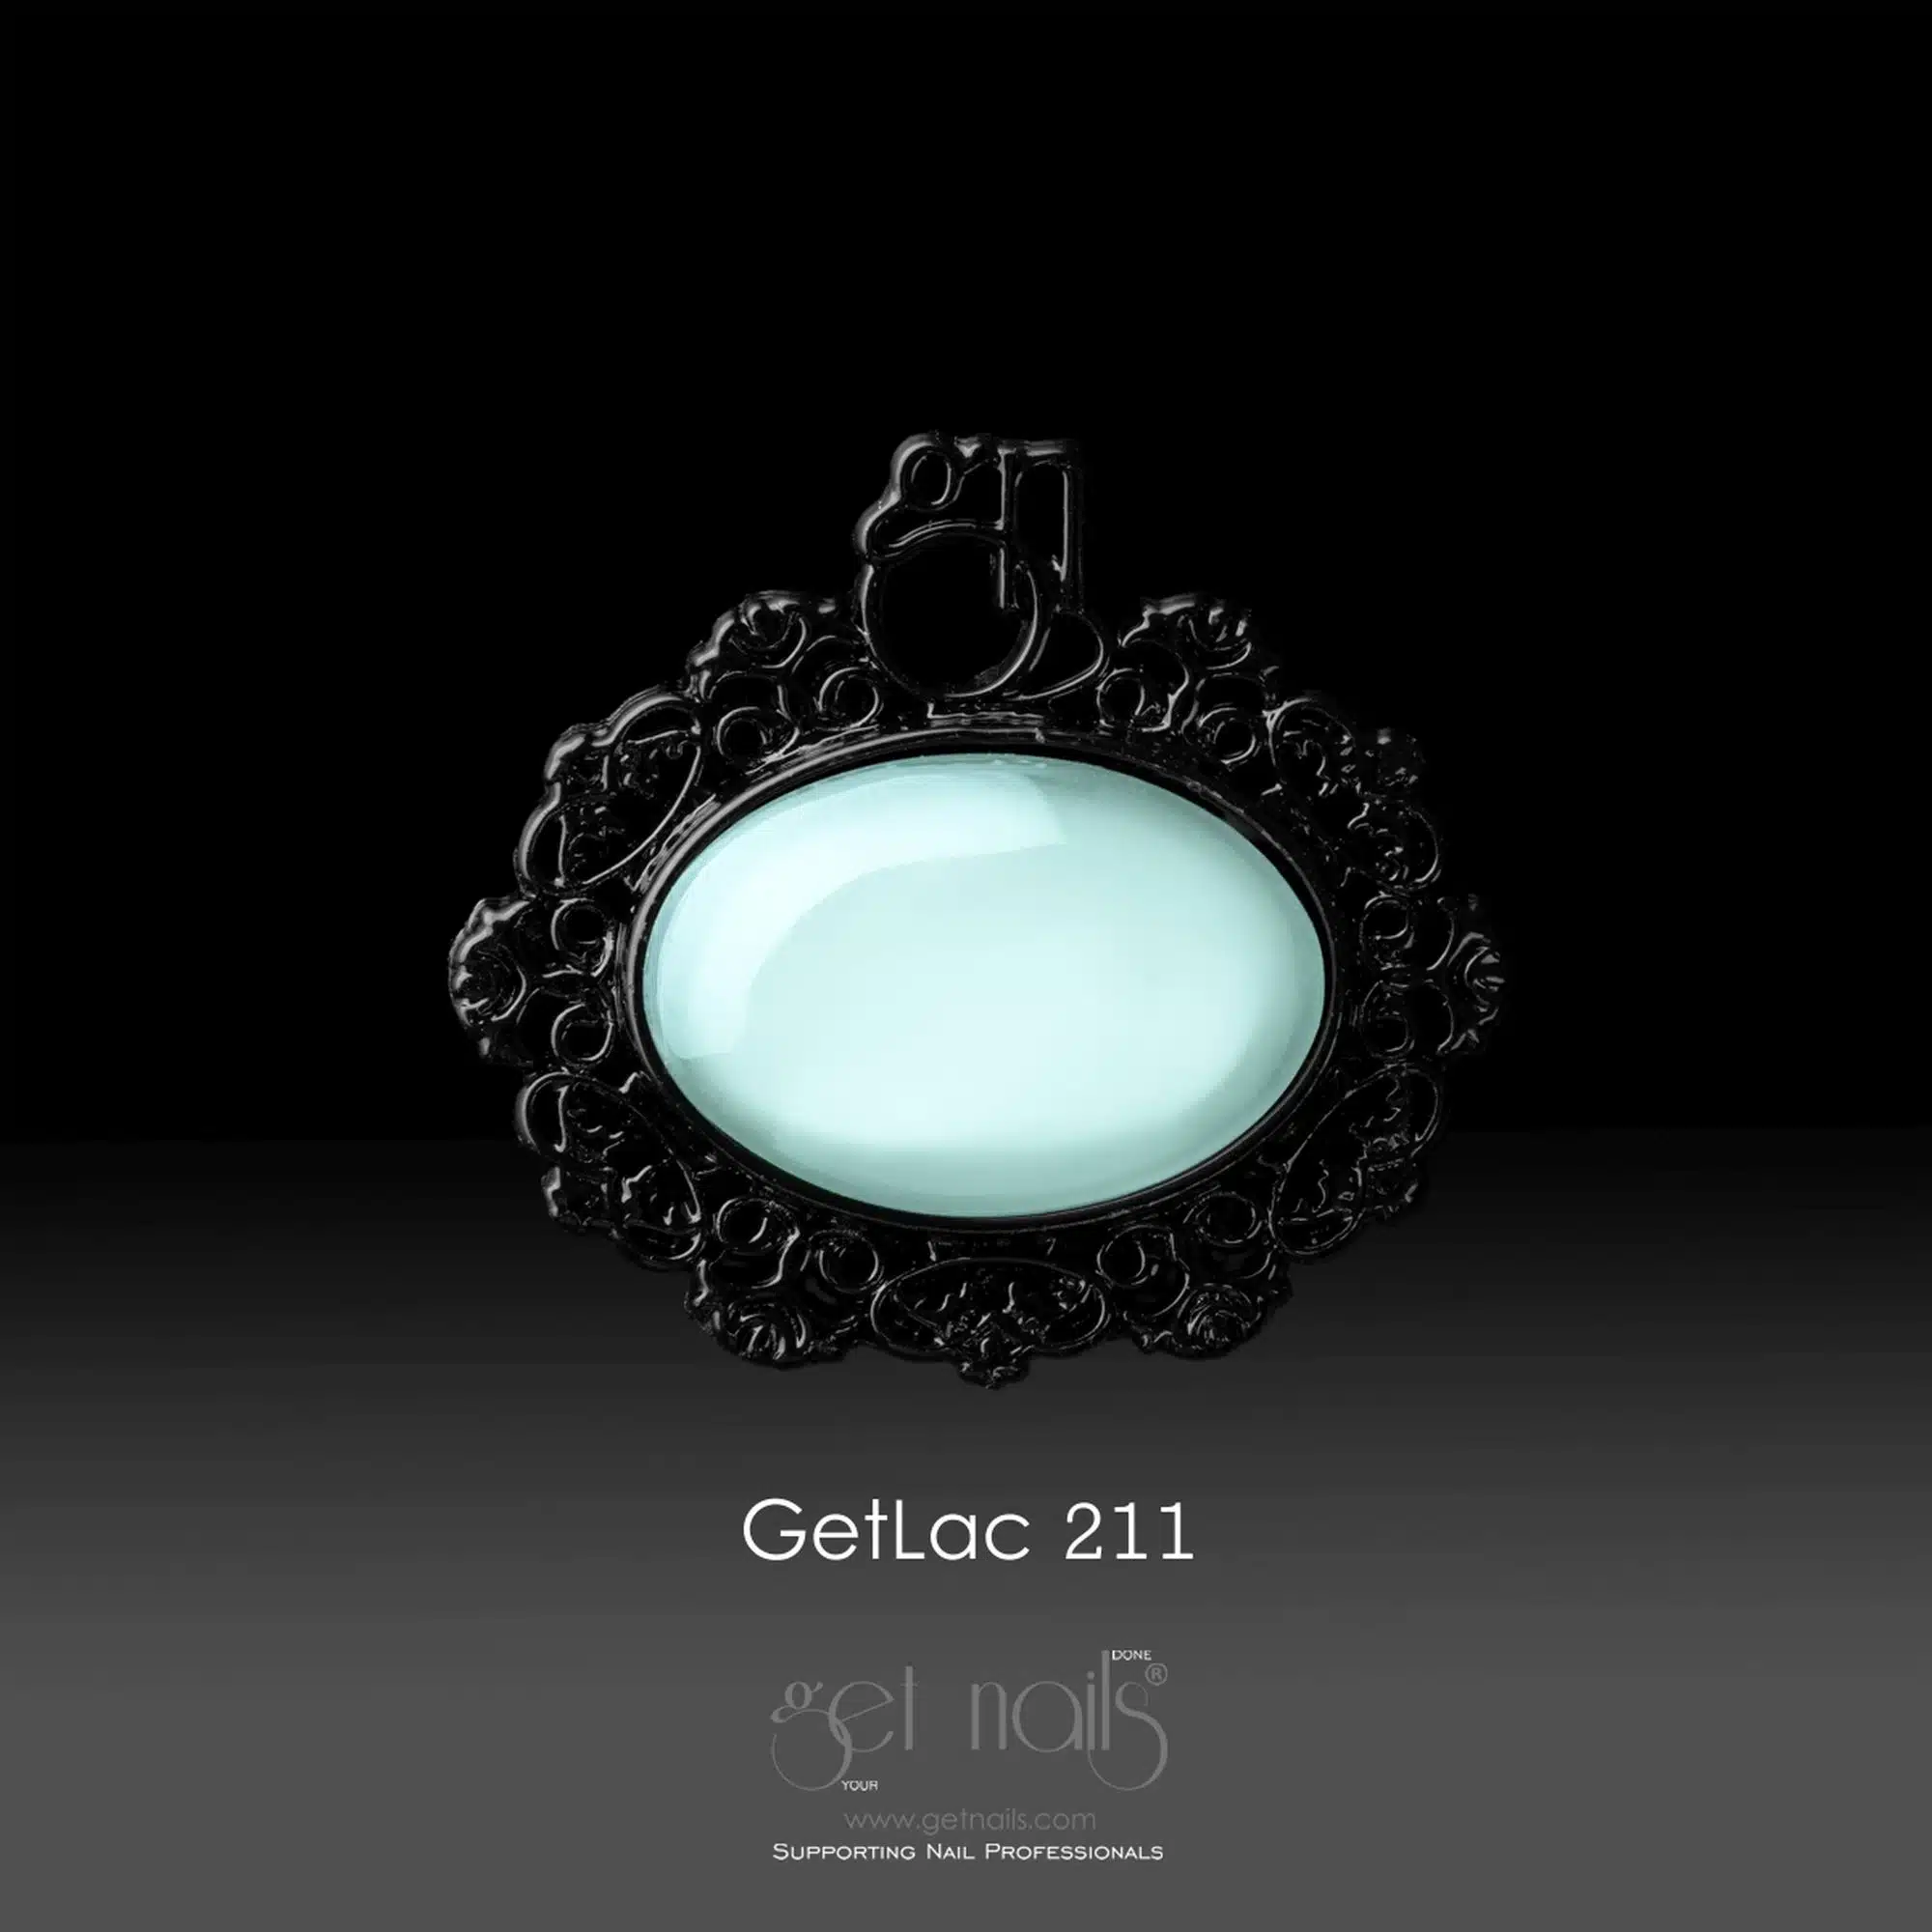 Get Nails Austria - GetLac 211 Mint Macaroon 15g